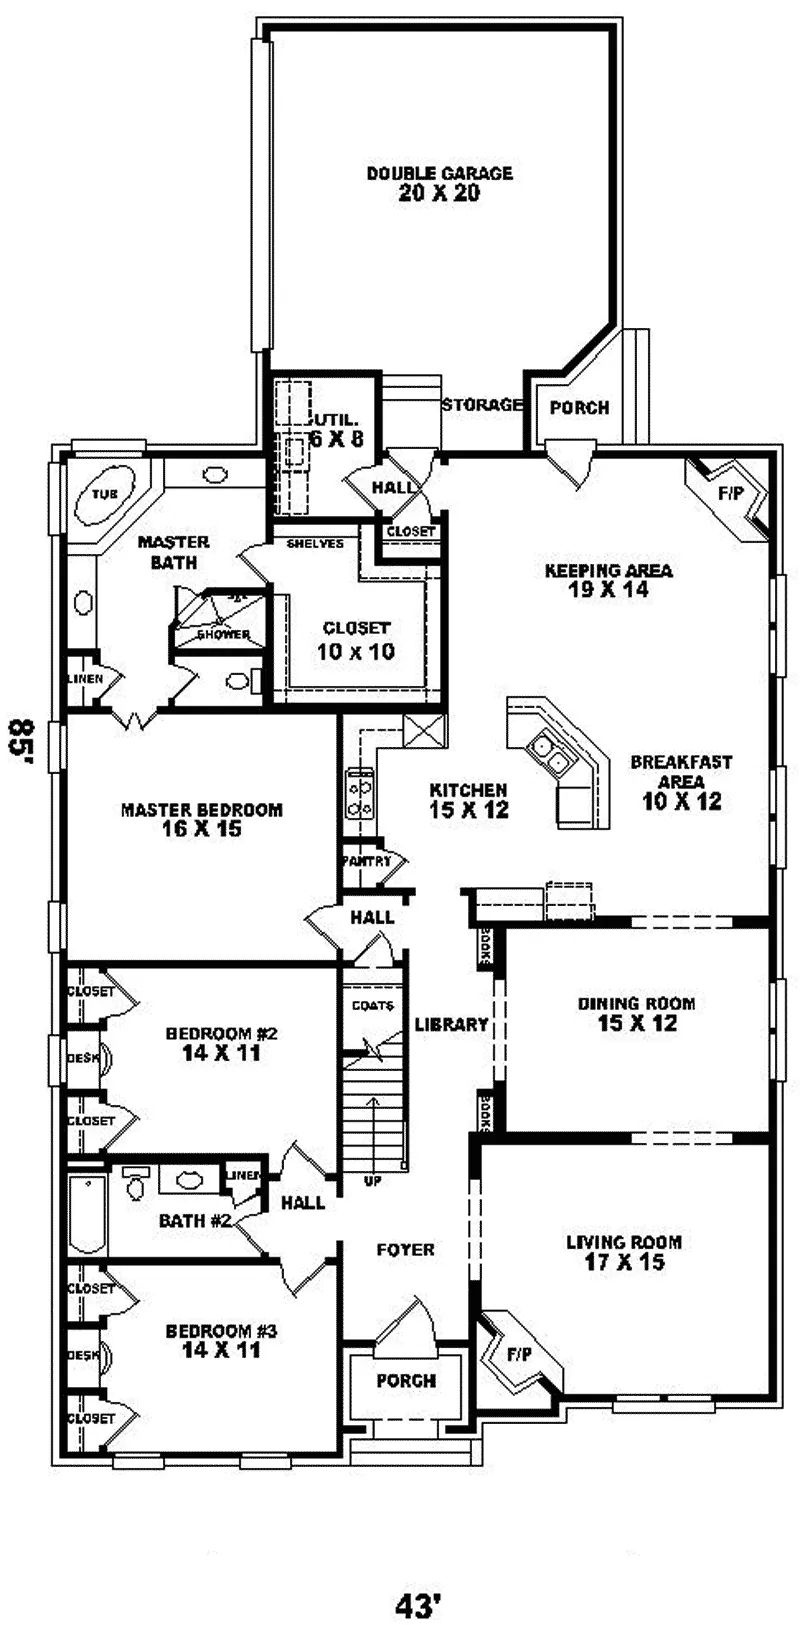 European House Plan First Floor - La Roux Tudor Style Home 087D-0668 - Shop House Plans and More